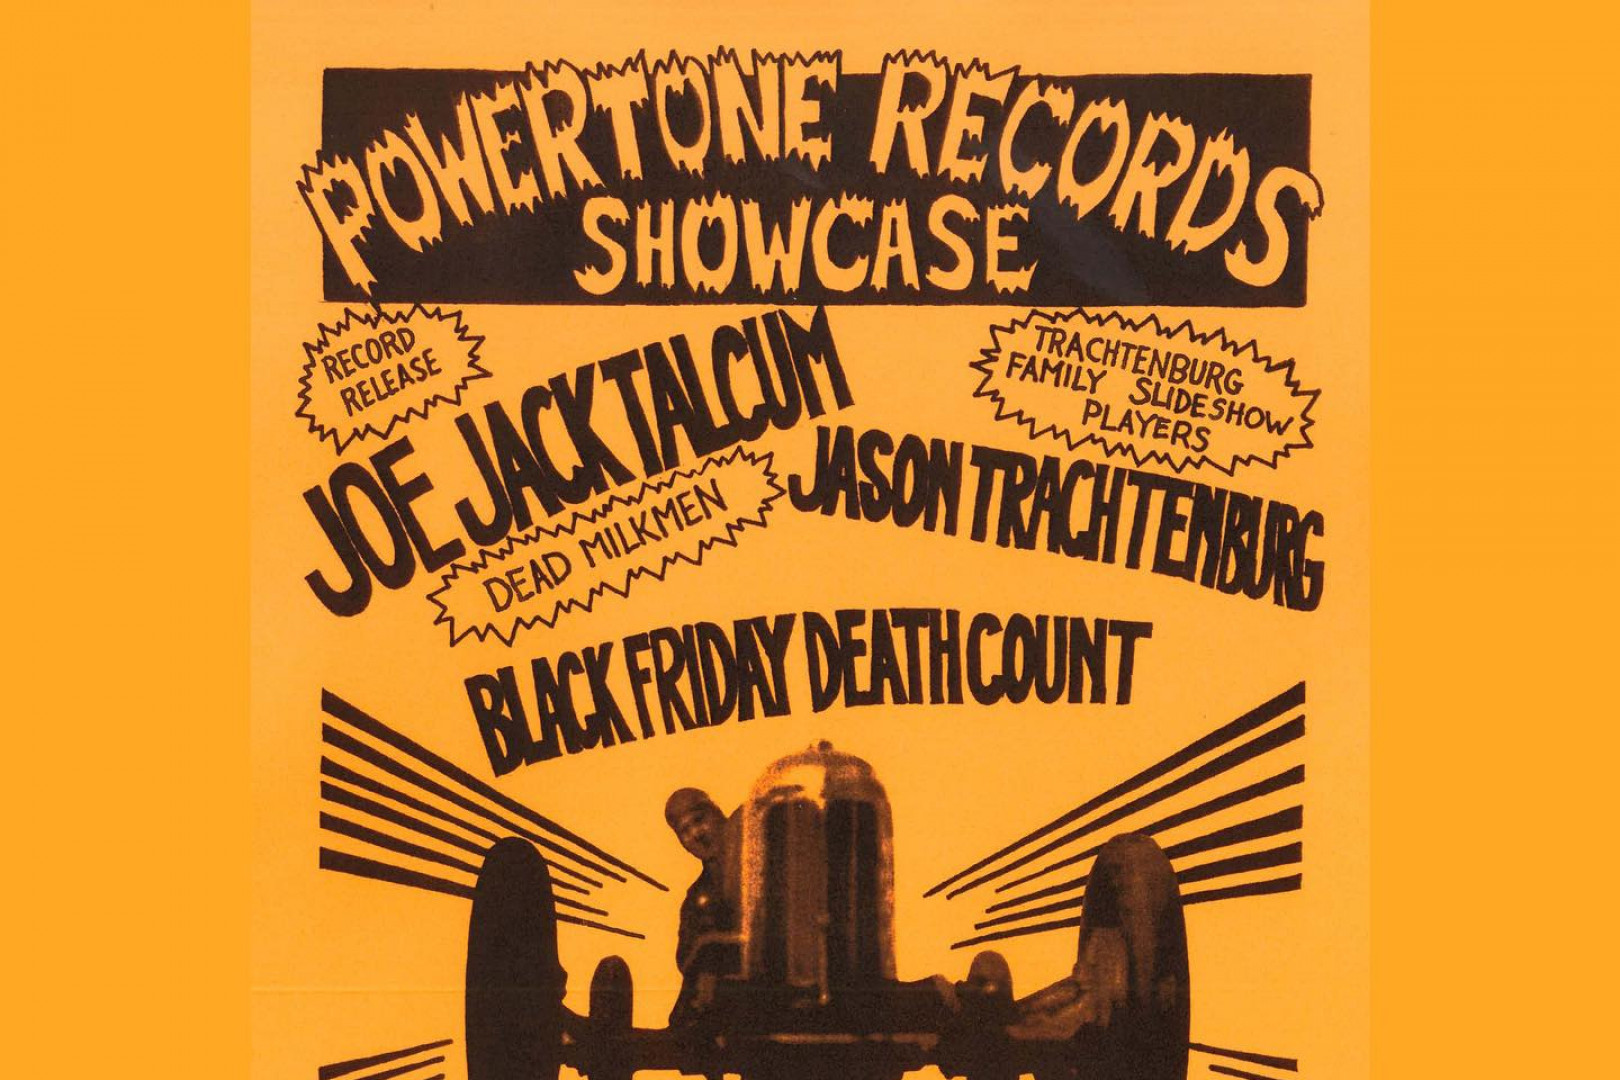 Joe Jack Talcum to release new EP this Sunday at Powertone showcase and we interviewed Powertone!